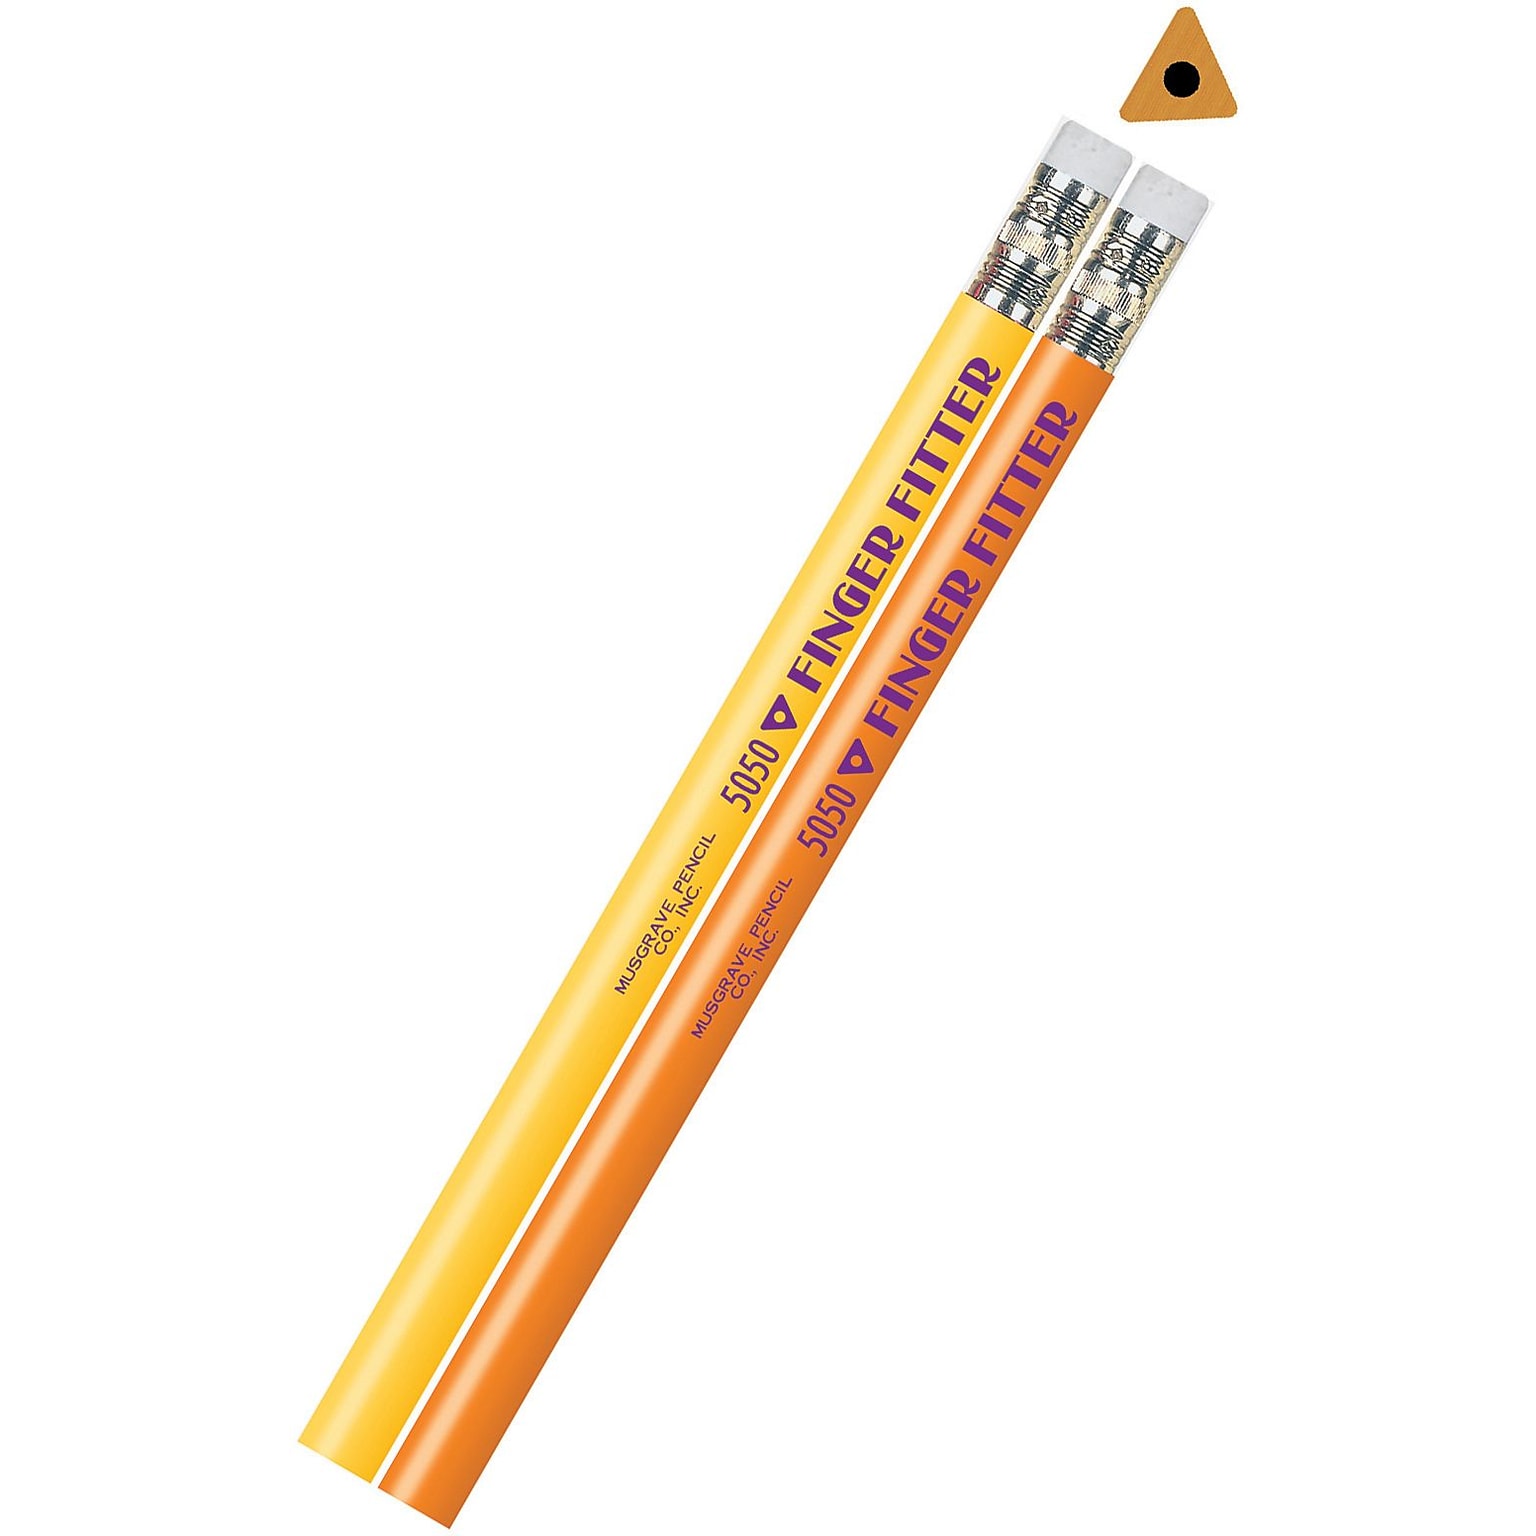 Musgrave Pencil Company Finger Fitter Jumbo Triangular Pencil, 12/DZ, 3 DZ/BD